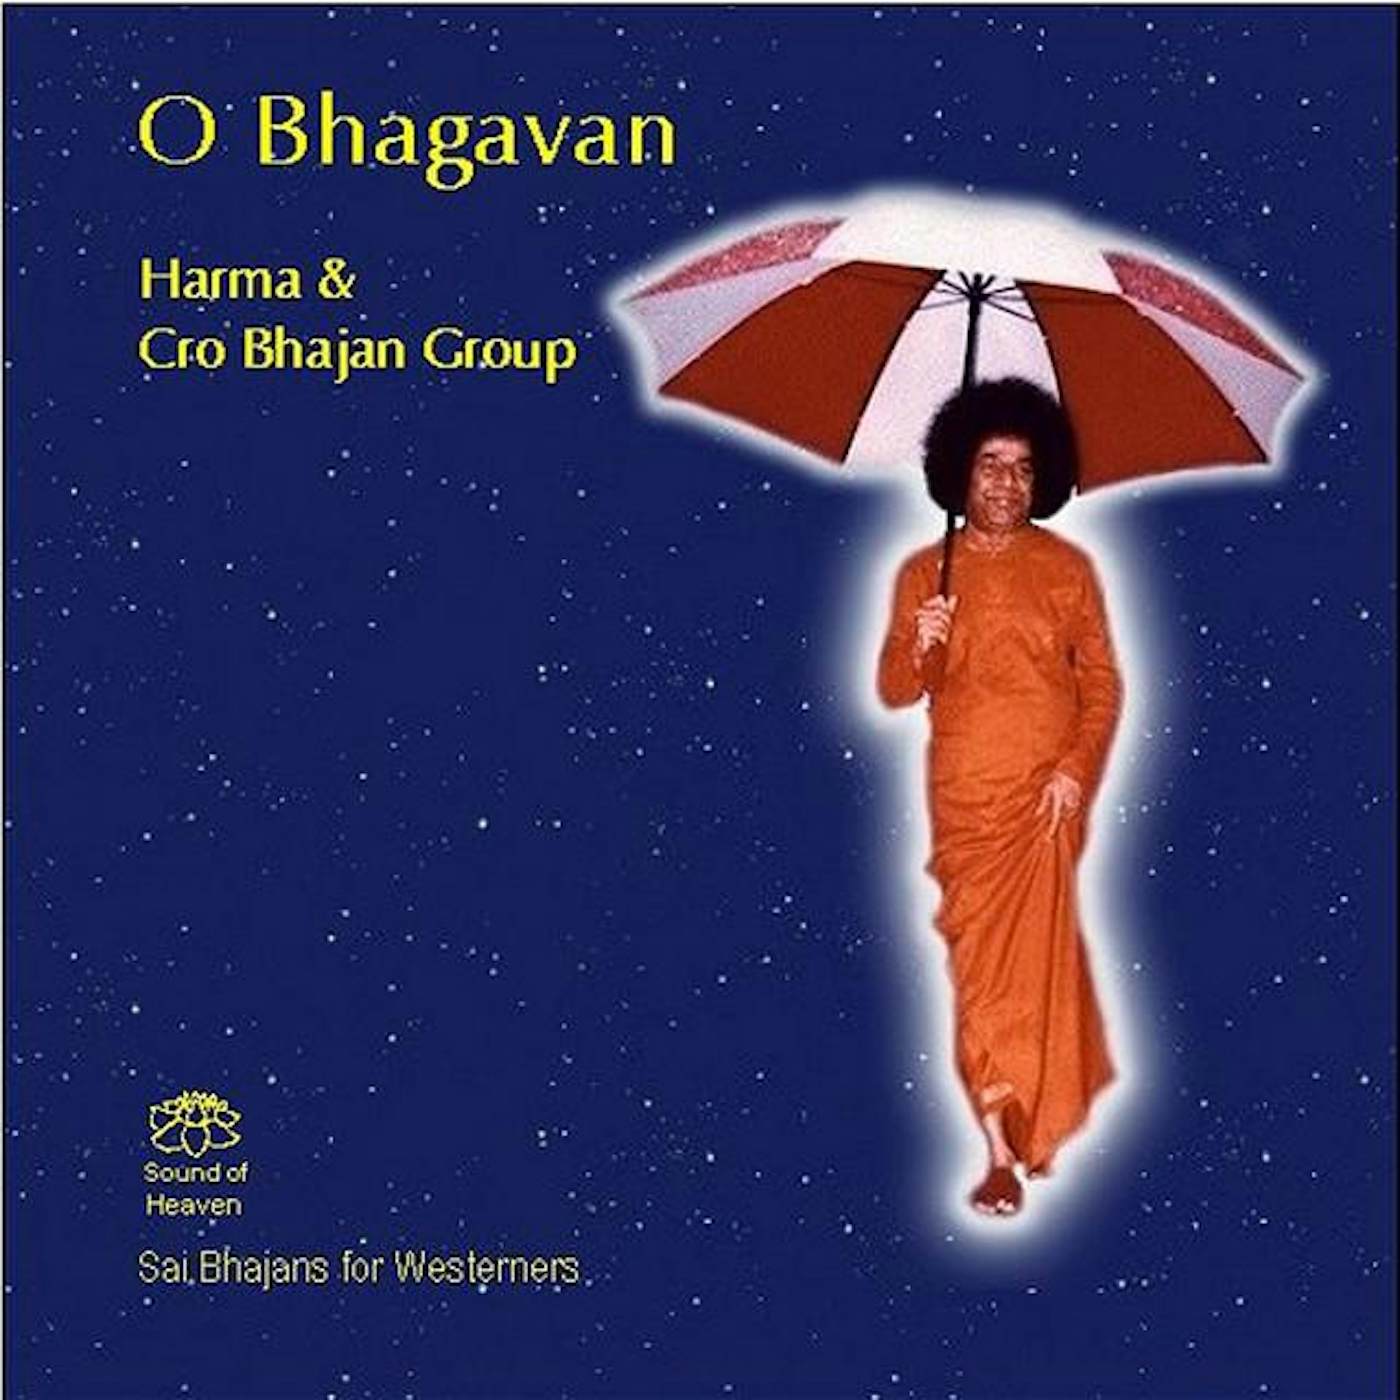 Harma & Cro Bhajan Group